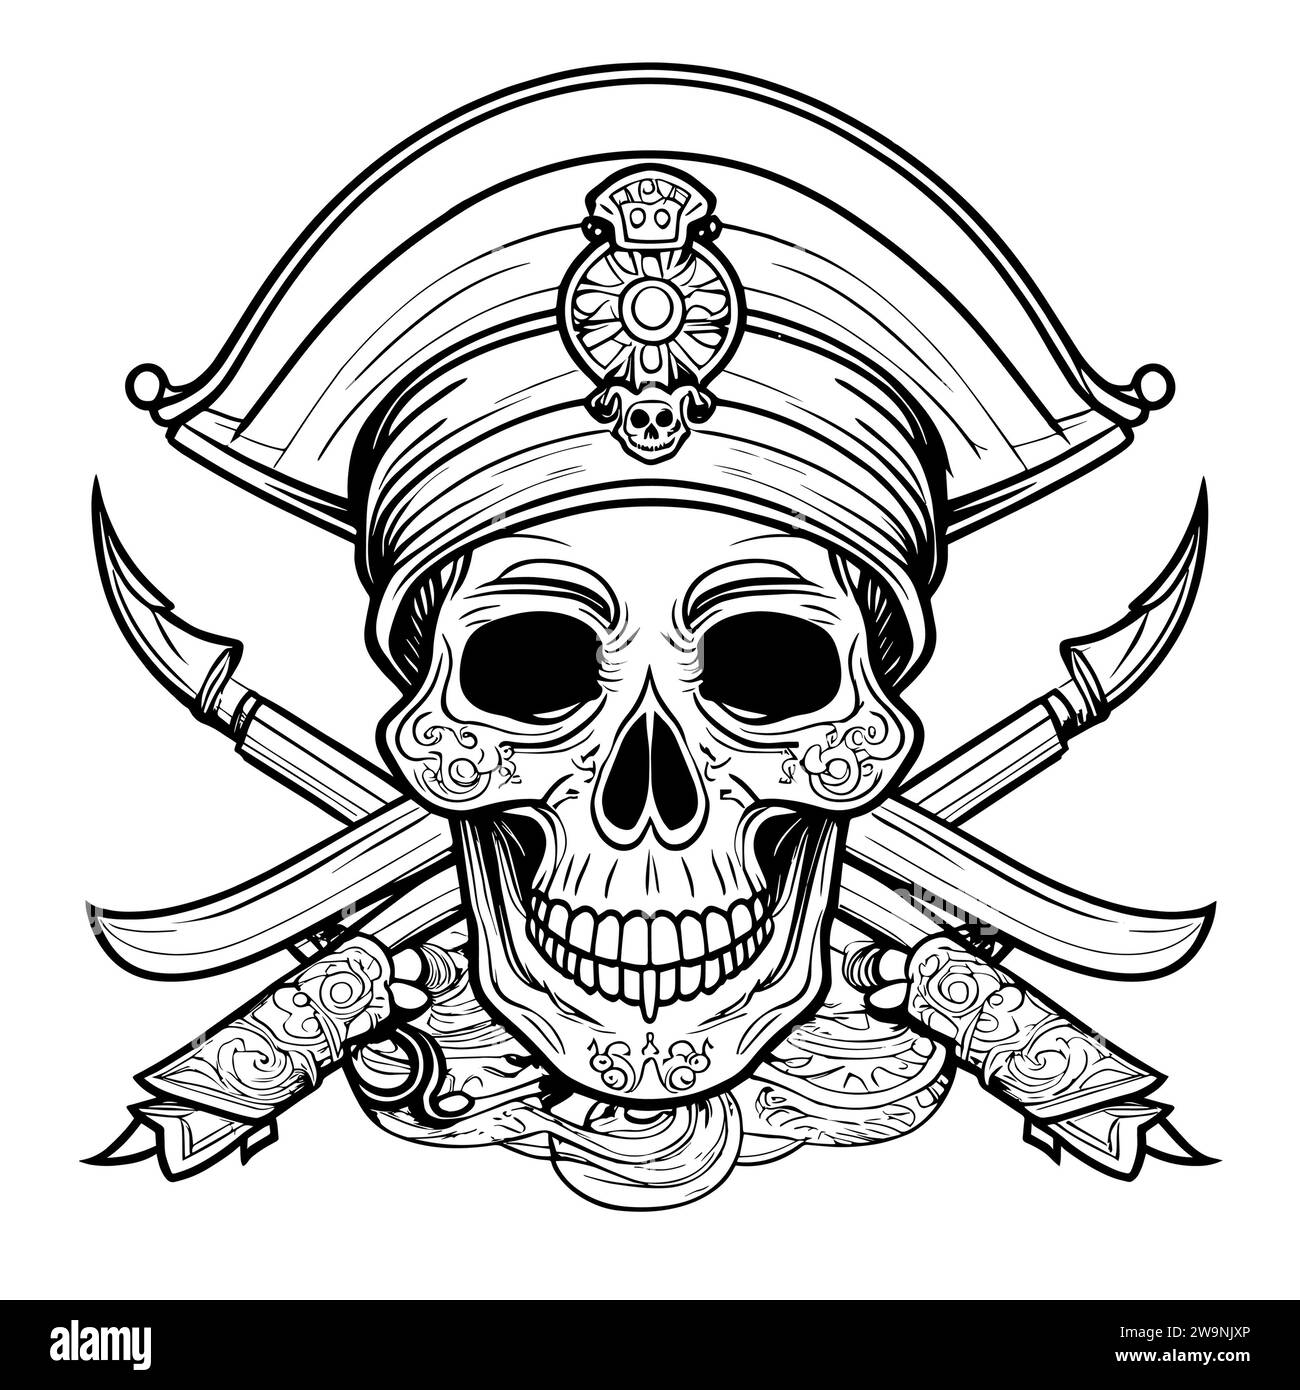 Pirates gaze hi-res stock photography and images - Alamy